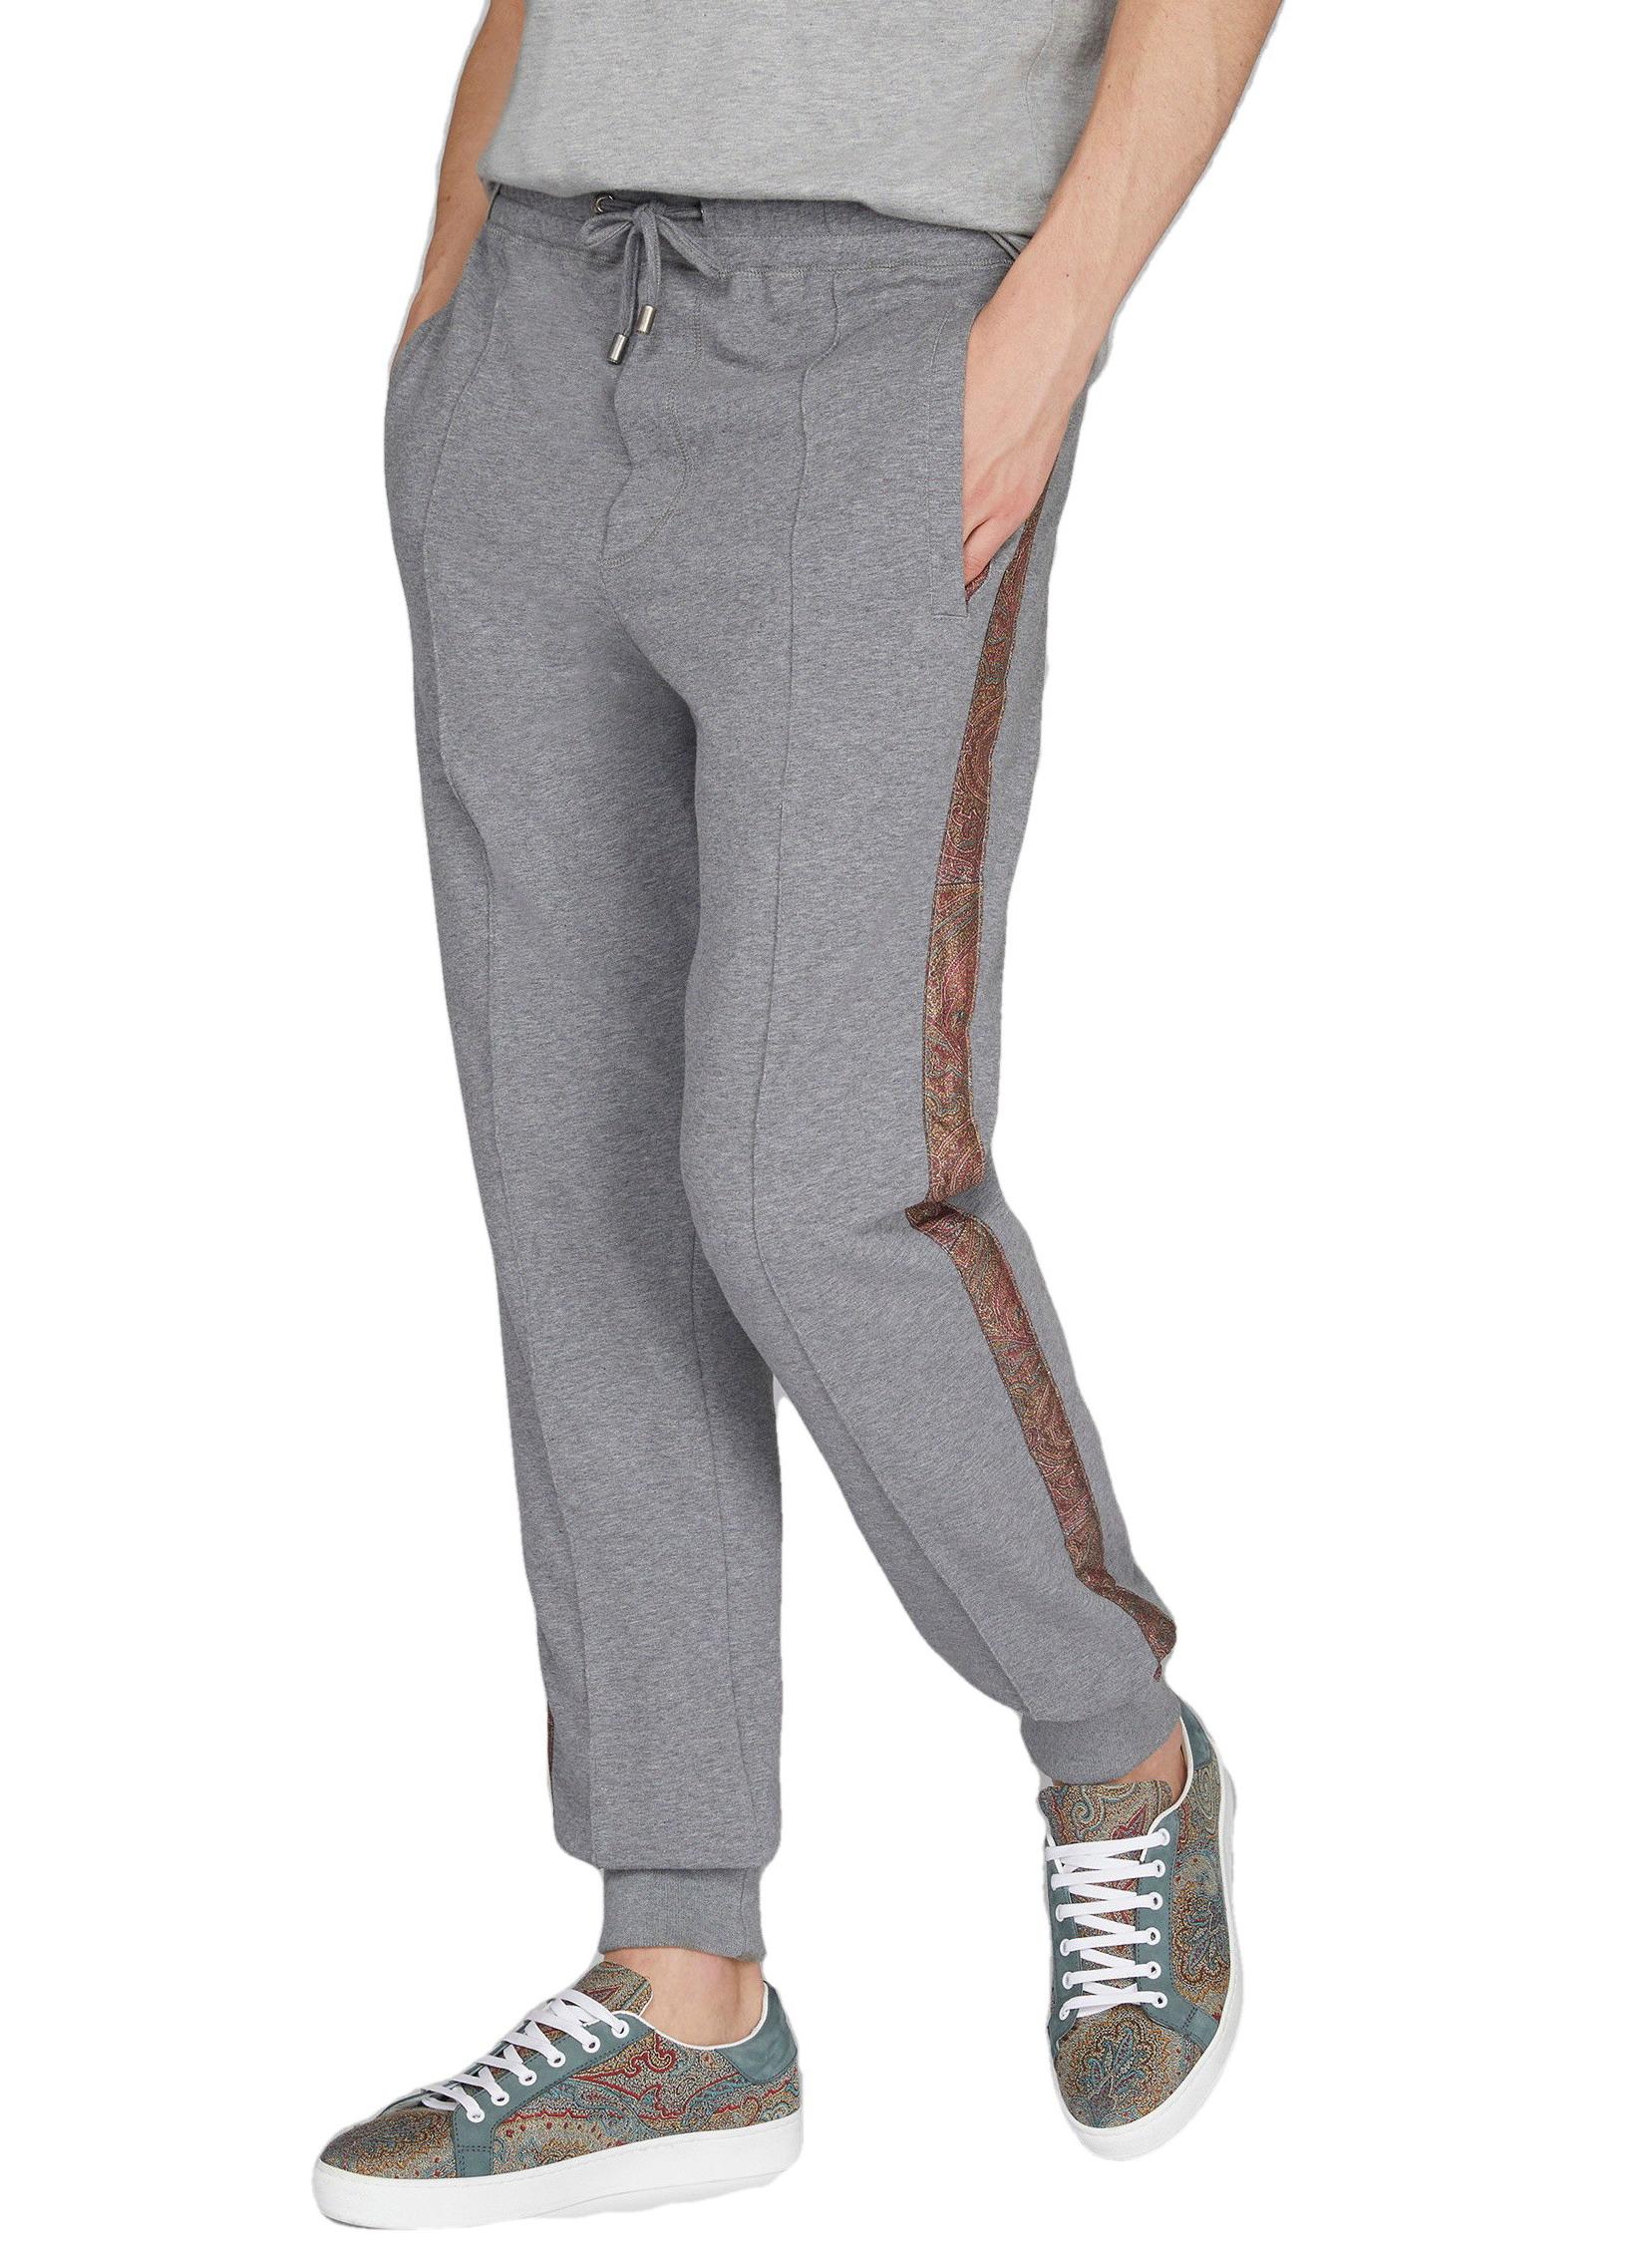 Men's Etro Grey Paisley Trimmed Mens Gym Pants Size 3XL NWT For Sale